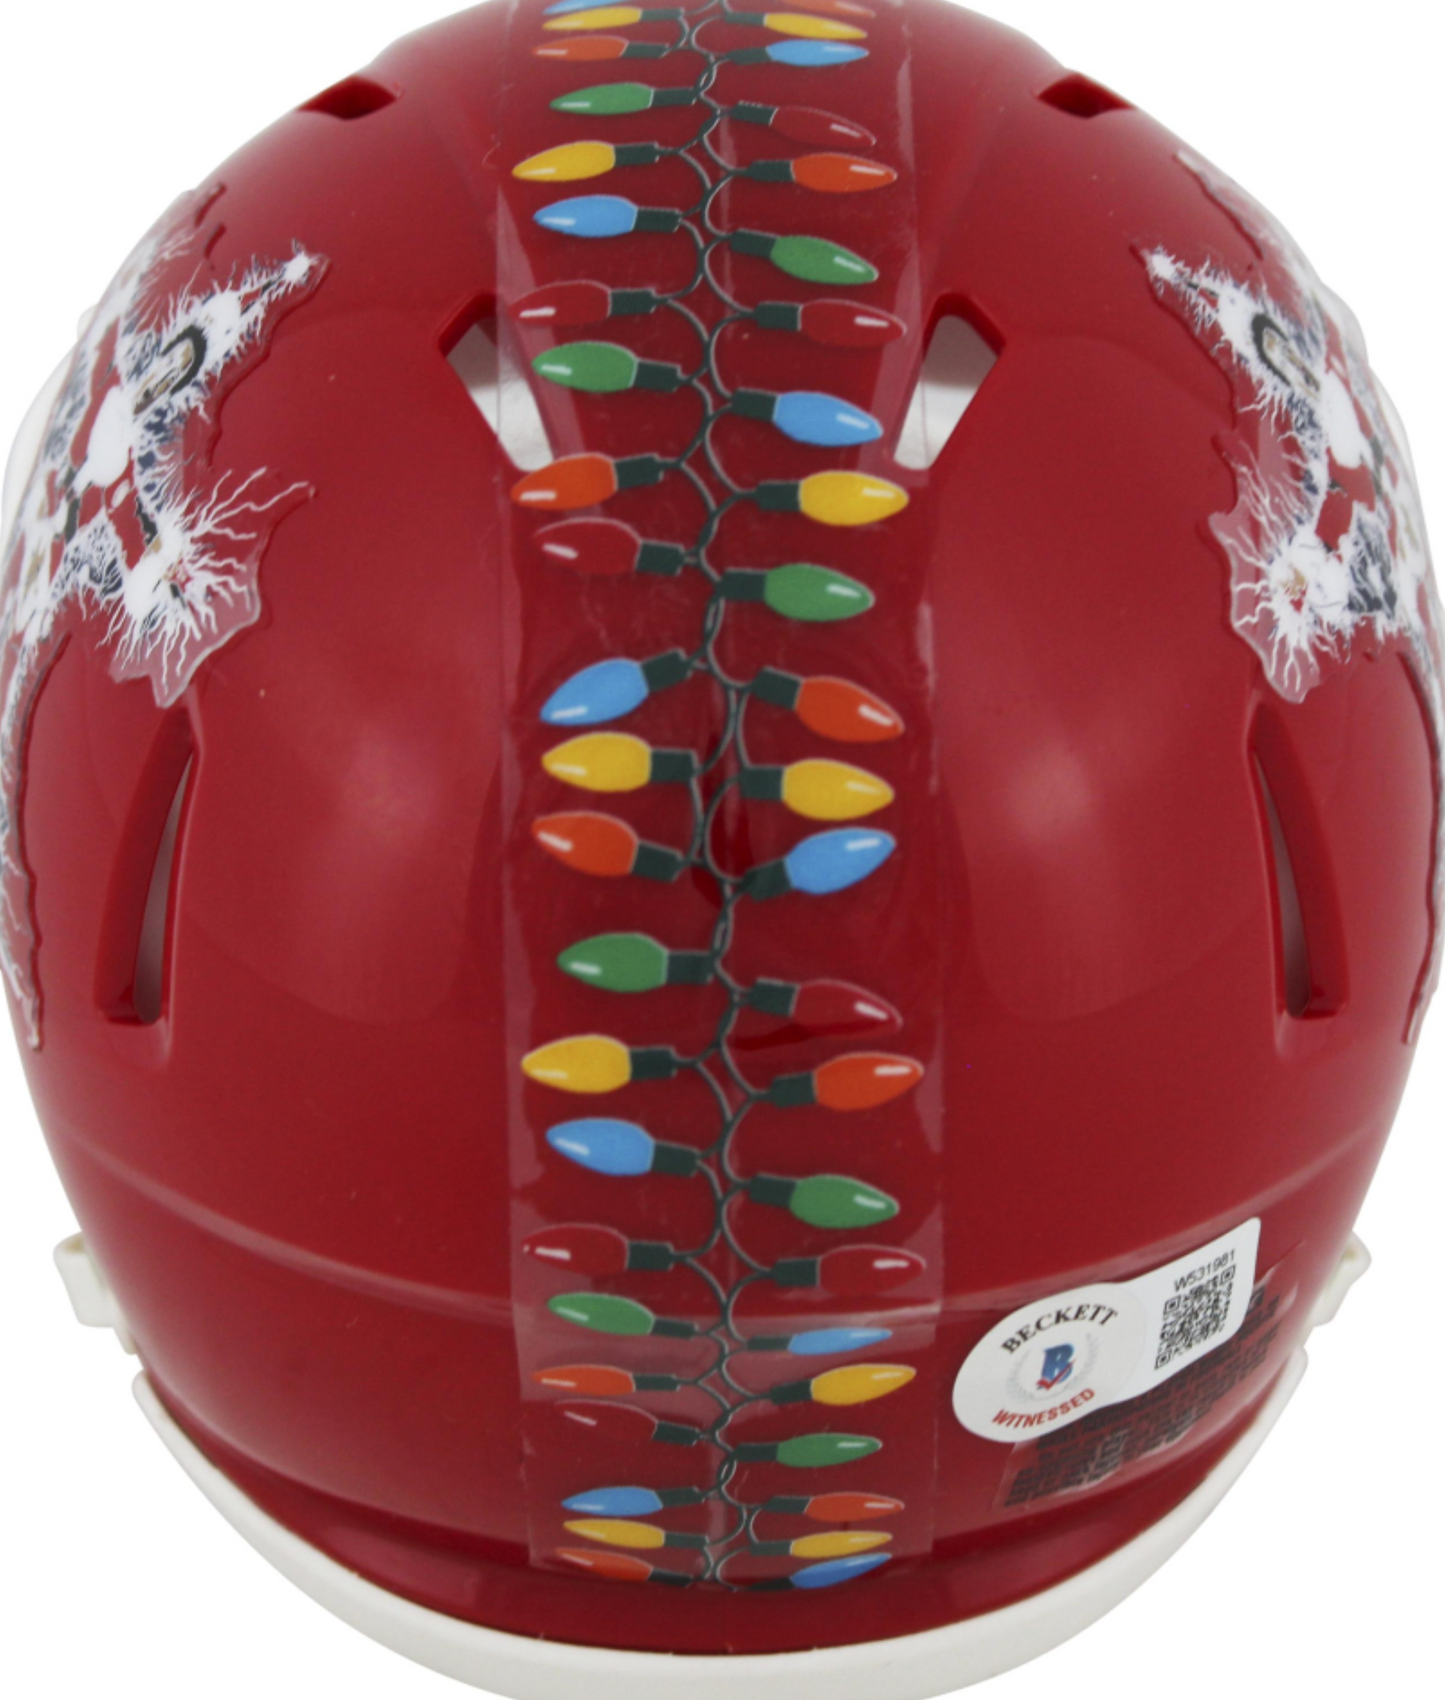 Chevy Chase Signed Christmas Vacation Mini Helmet (Beckett COA)